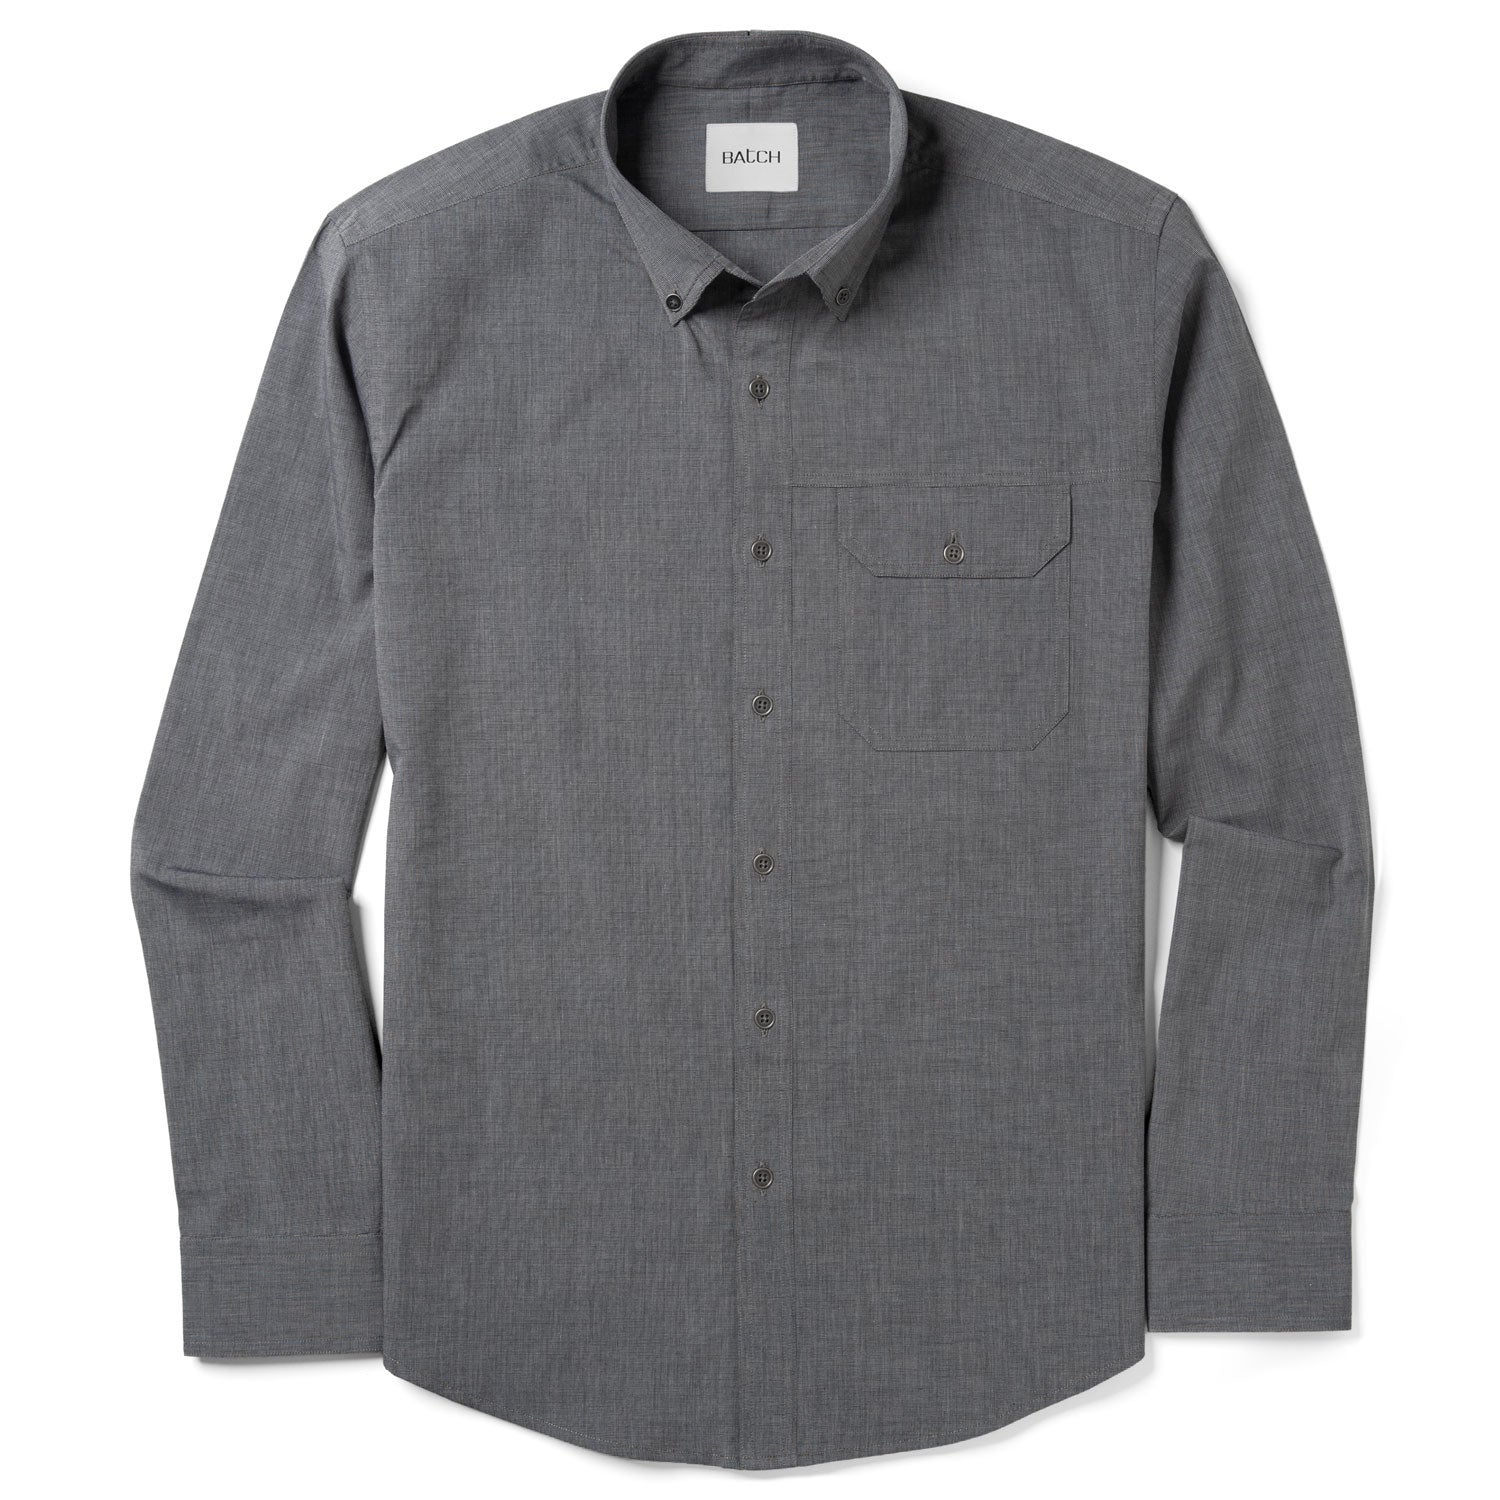 Builder Casual Shirt – Titanium Gray Cotton End-on-end